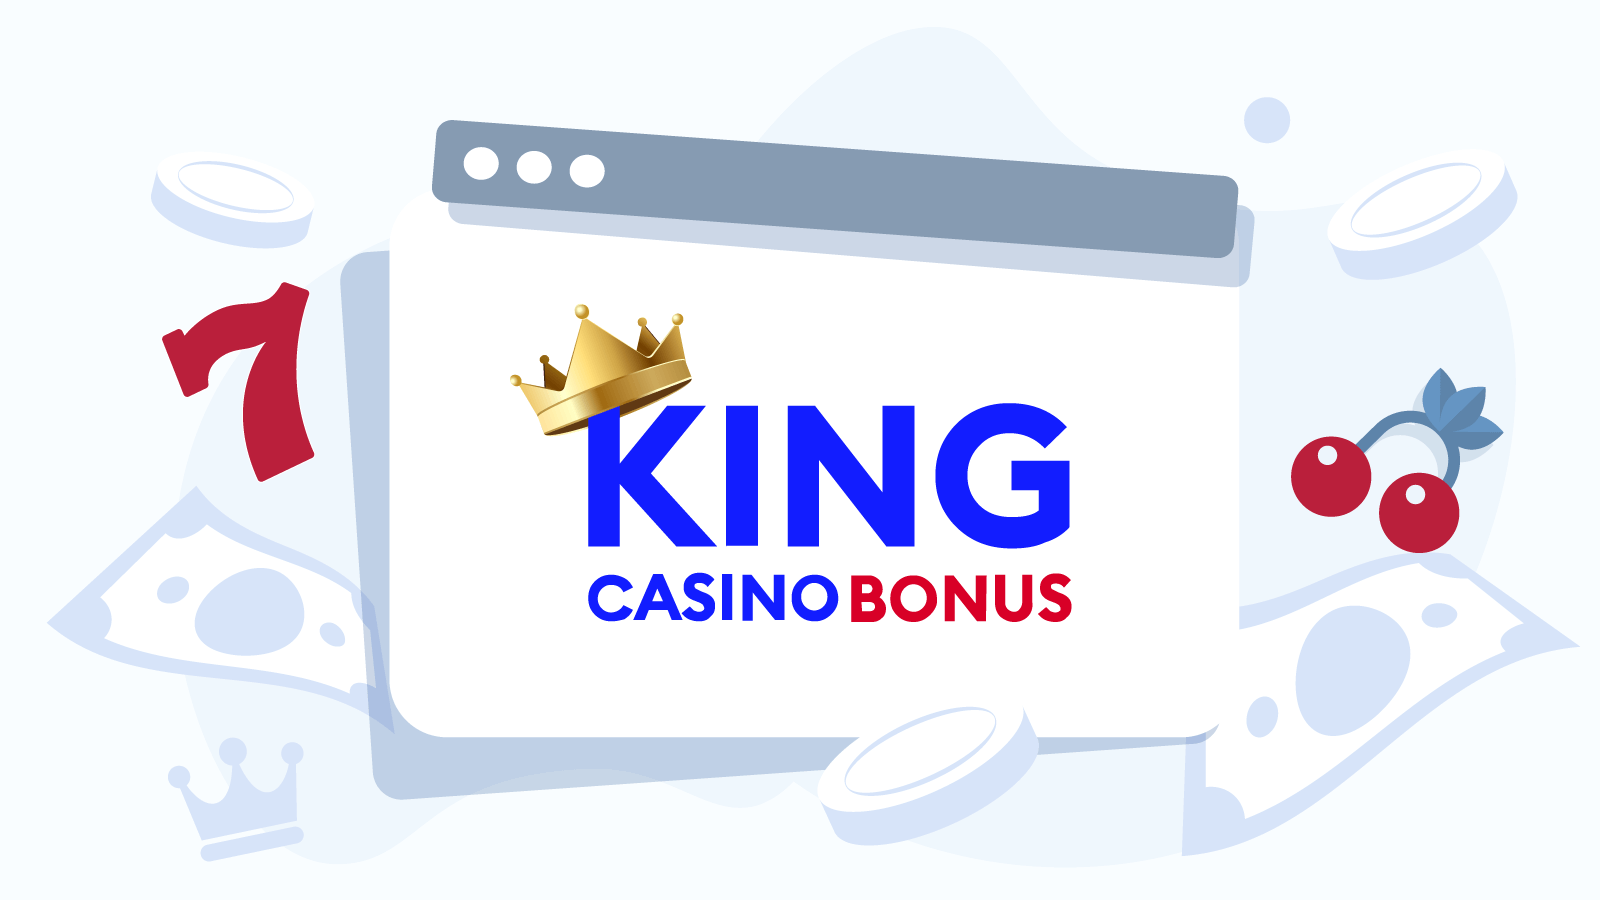 KingCasinoBonus-Defines-a-High-Payout-Online-Casino